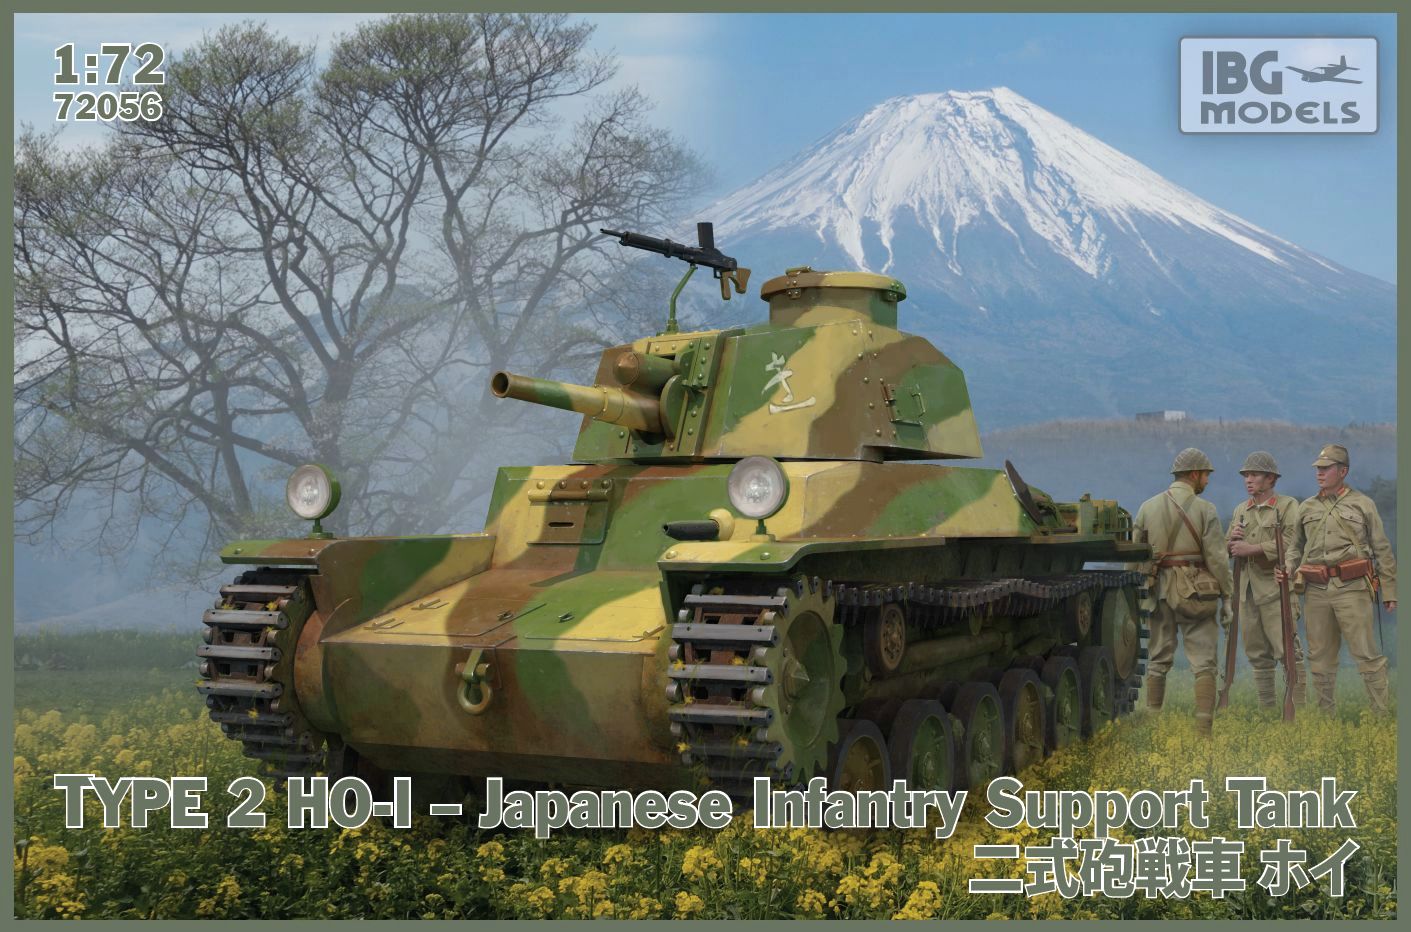 Type 2 Ho-I Japanese Infantry Support Tank